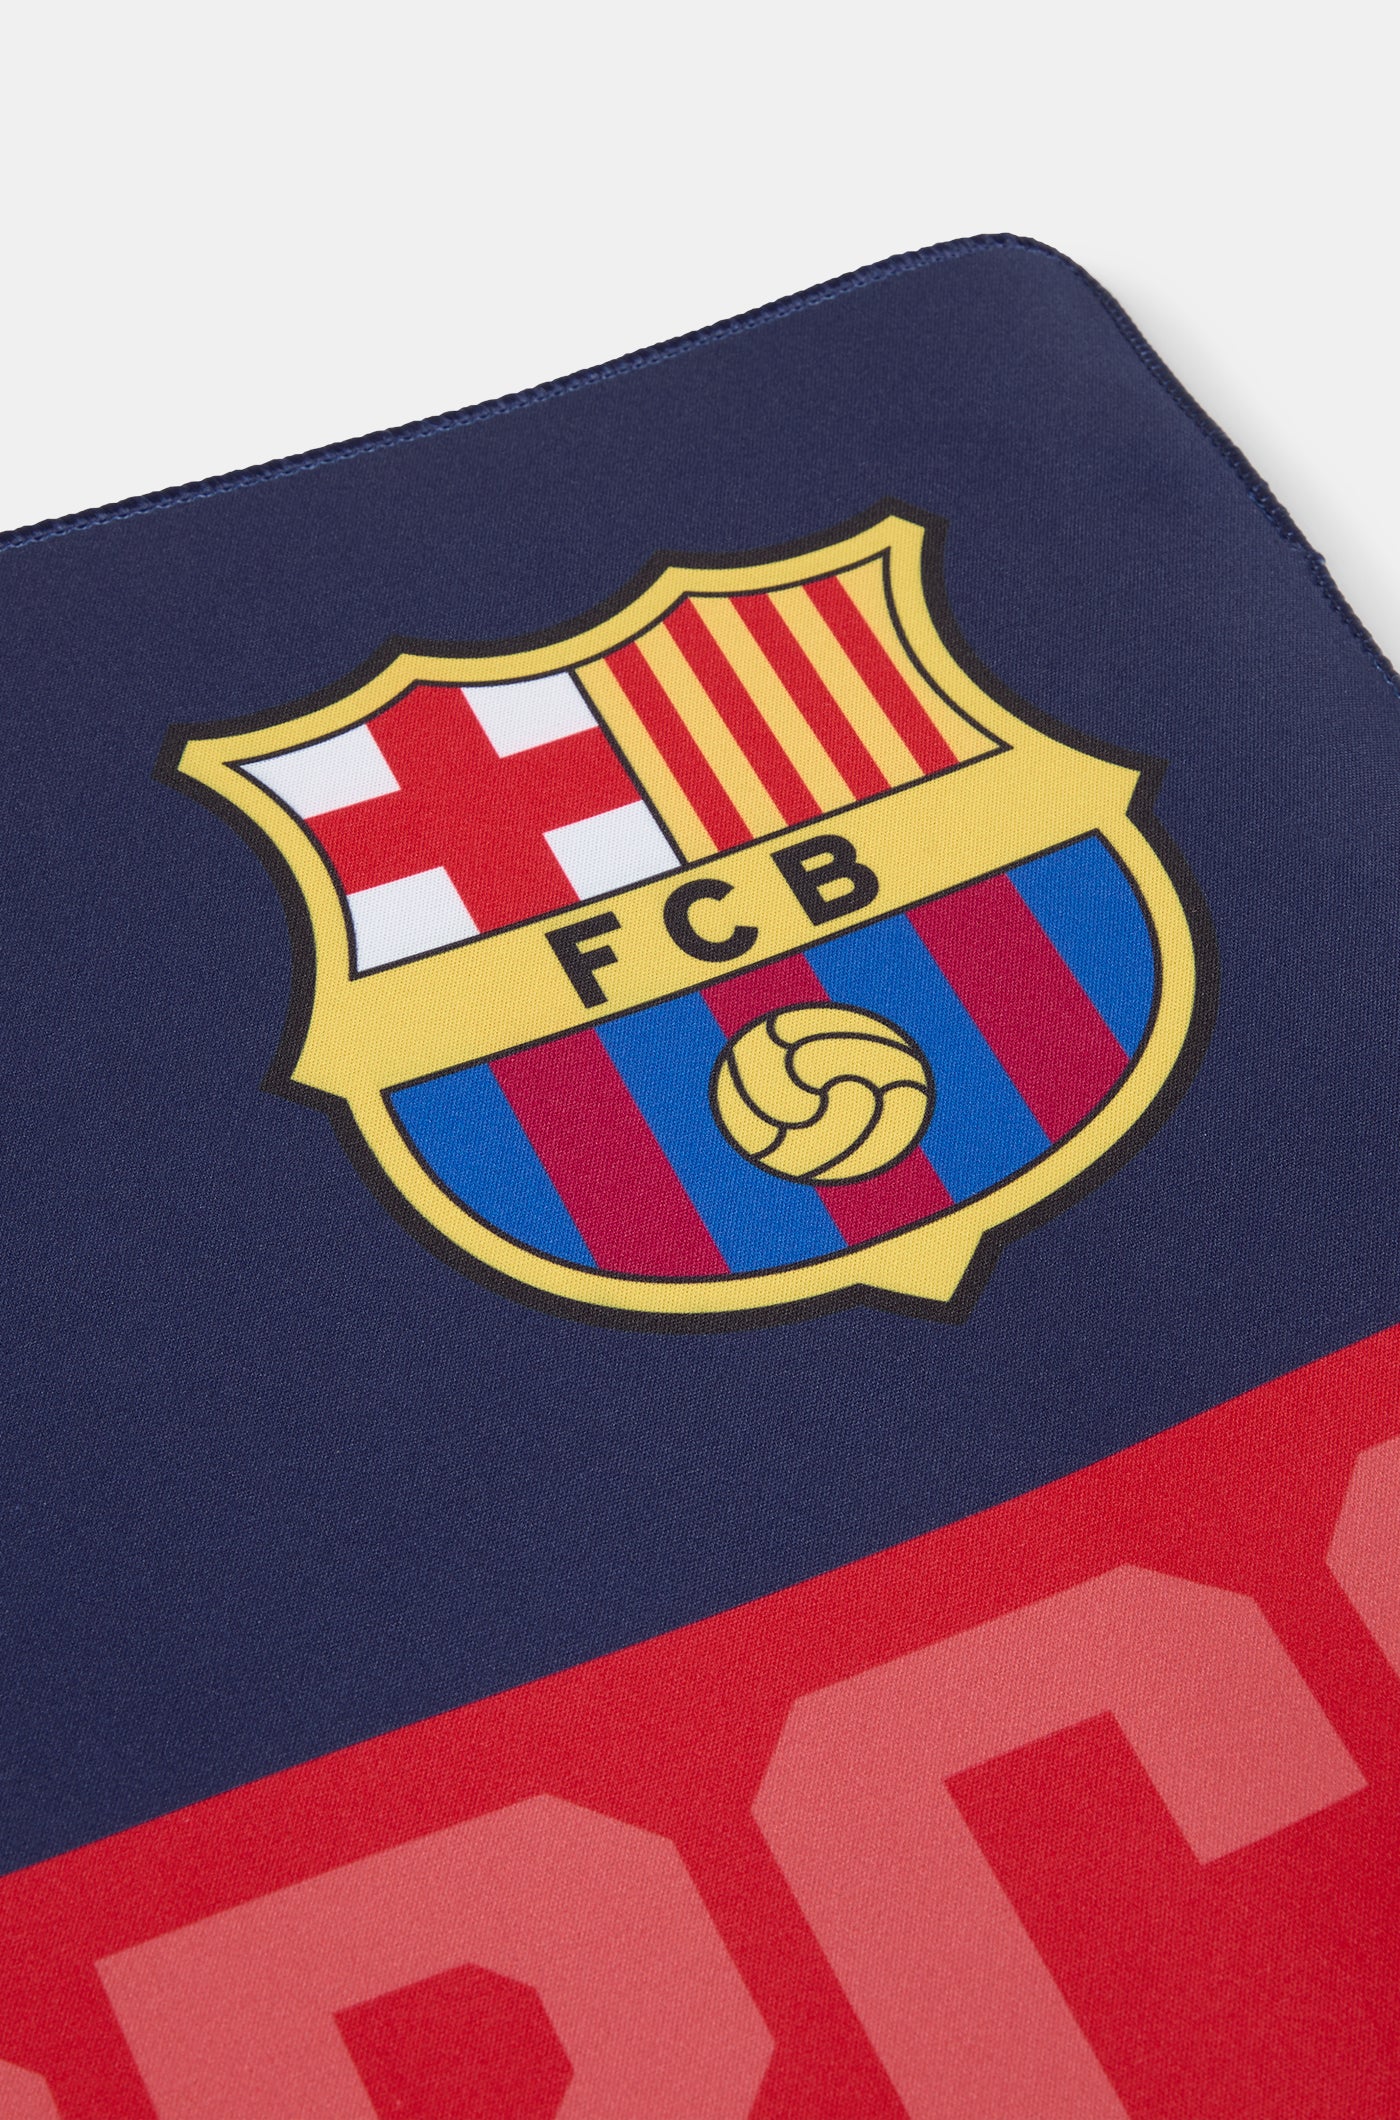 FC Barcelona XL Mouse Pad